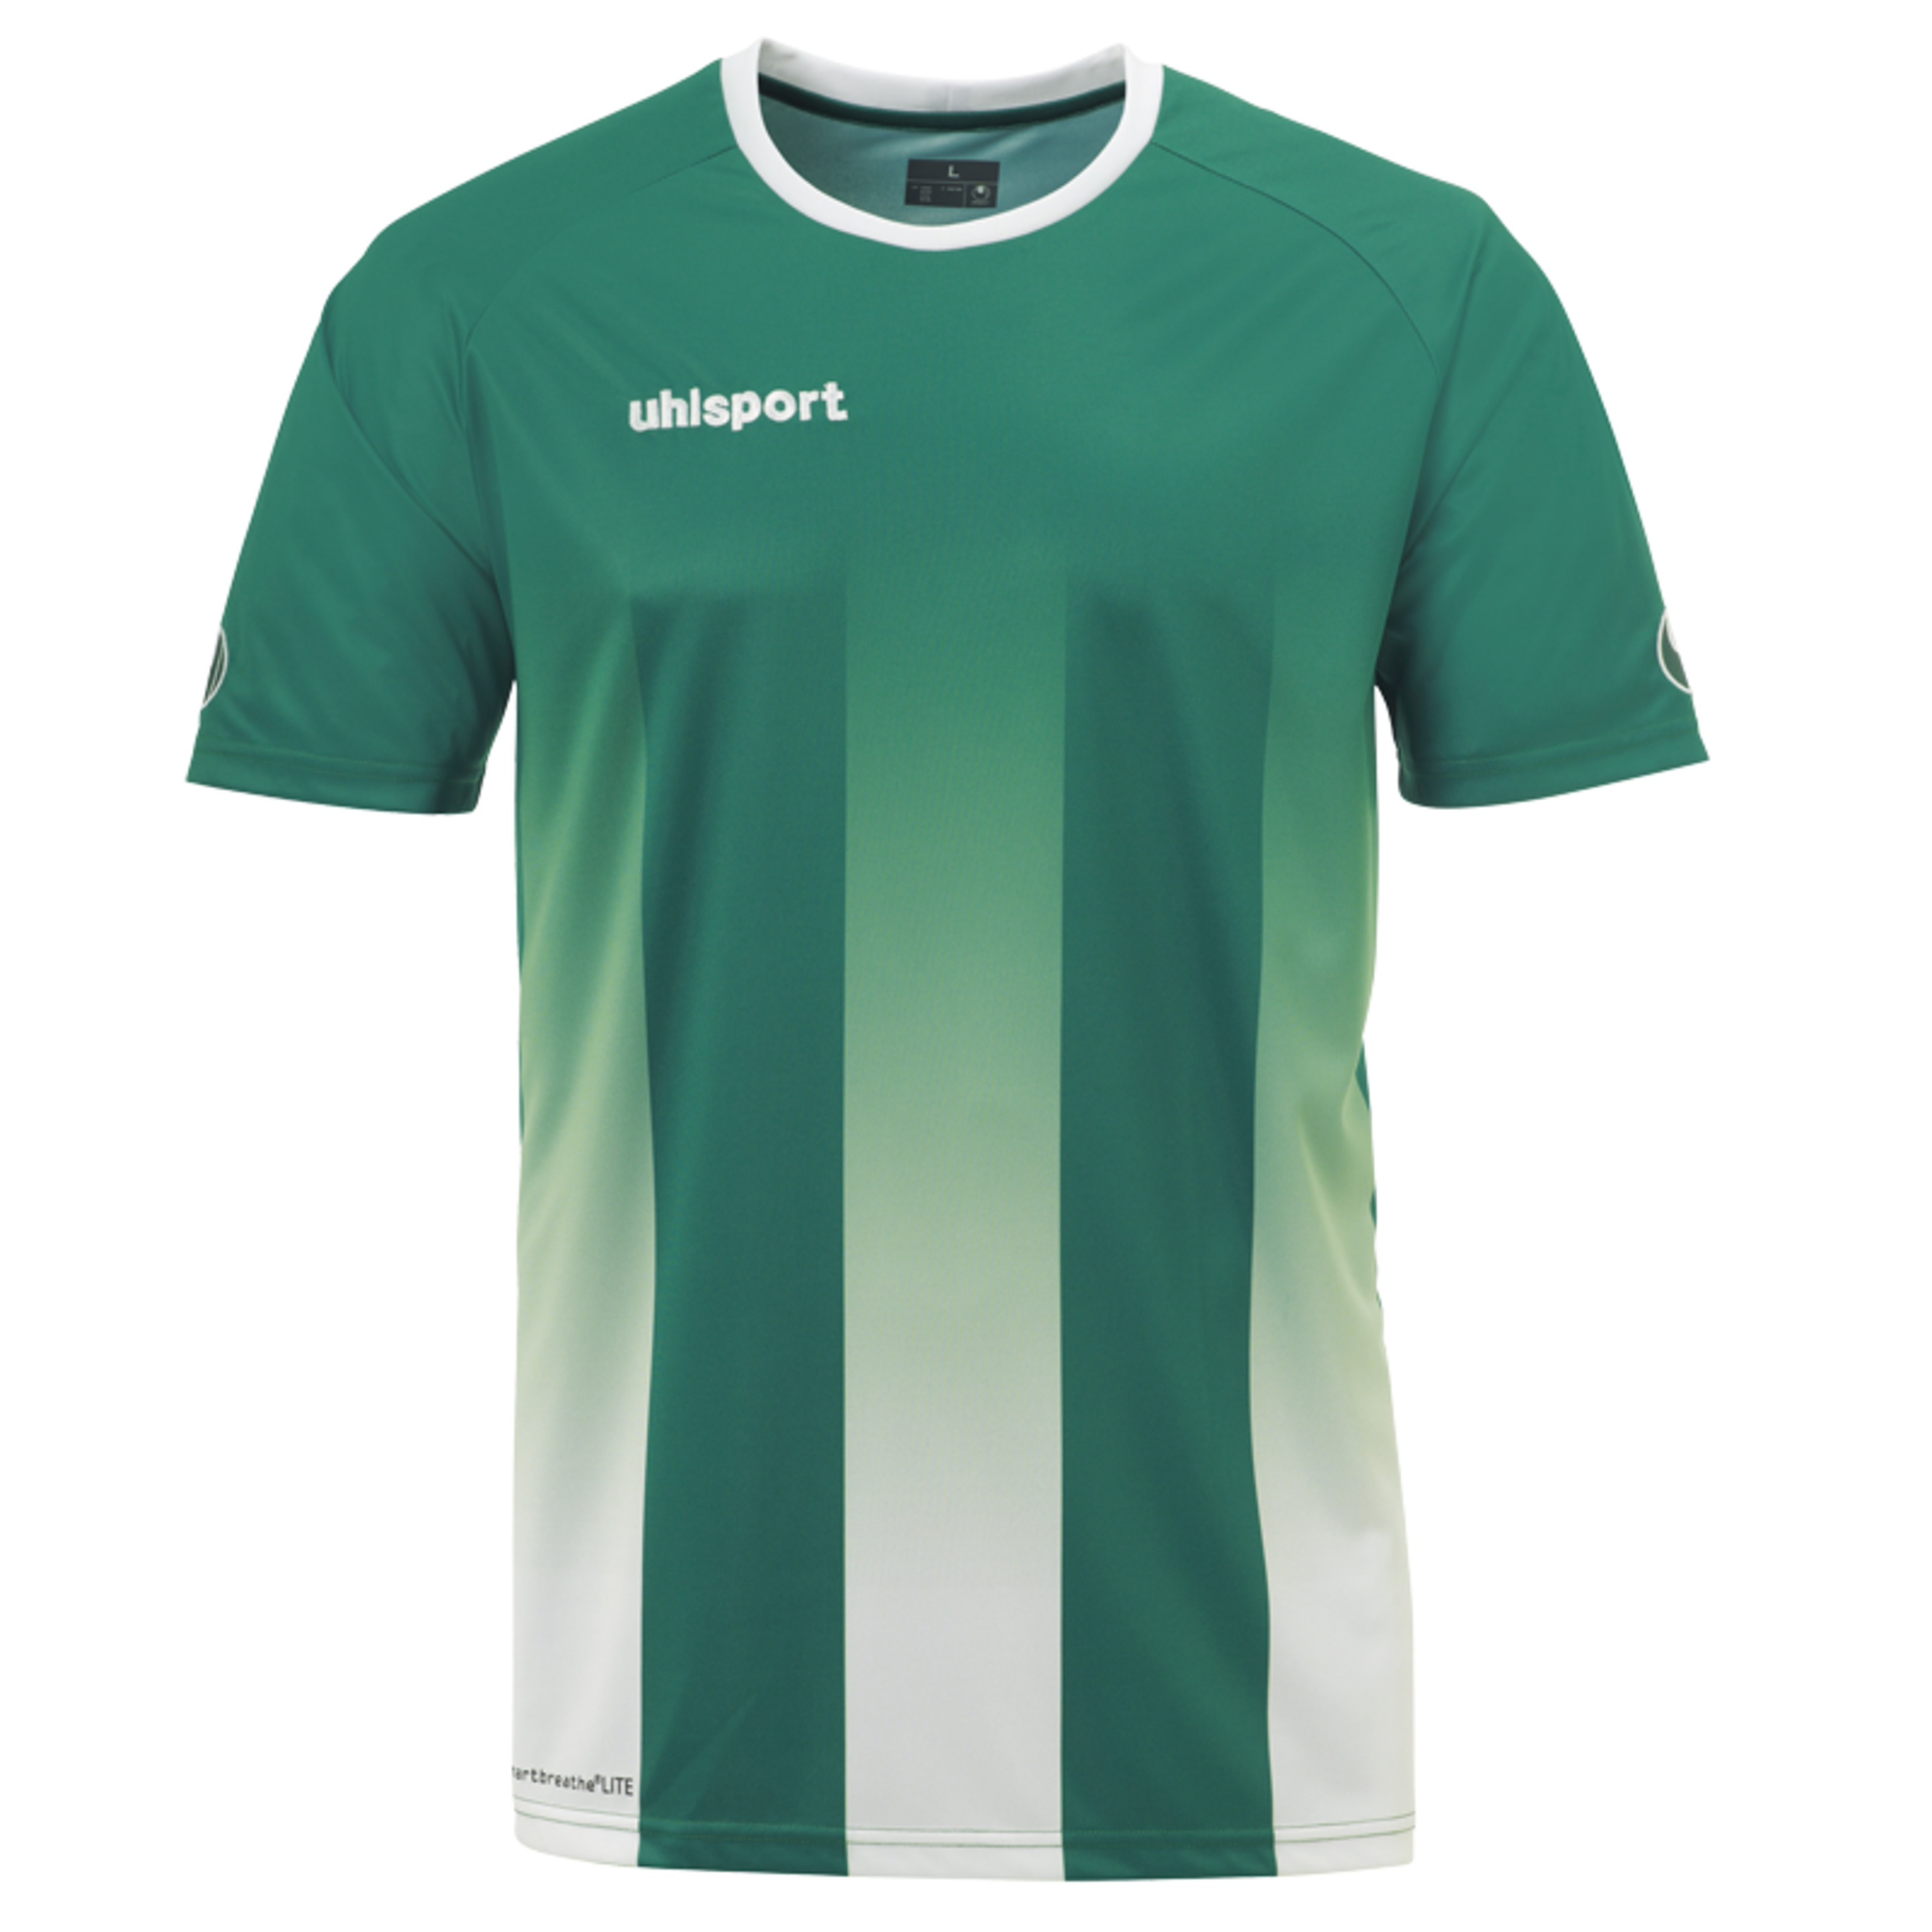 Stripe Camiseta Mc Lagoon/blanco Uhlsport - blanco-verde - 